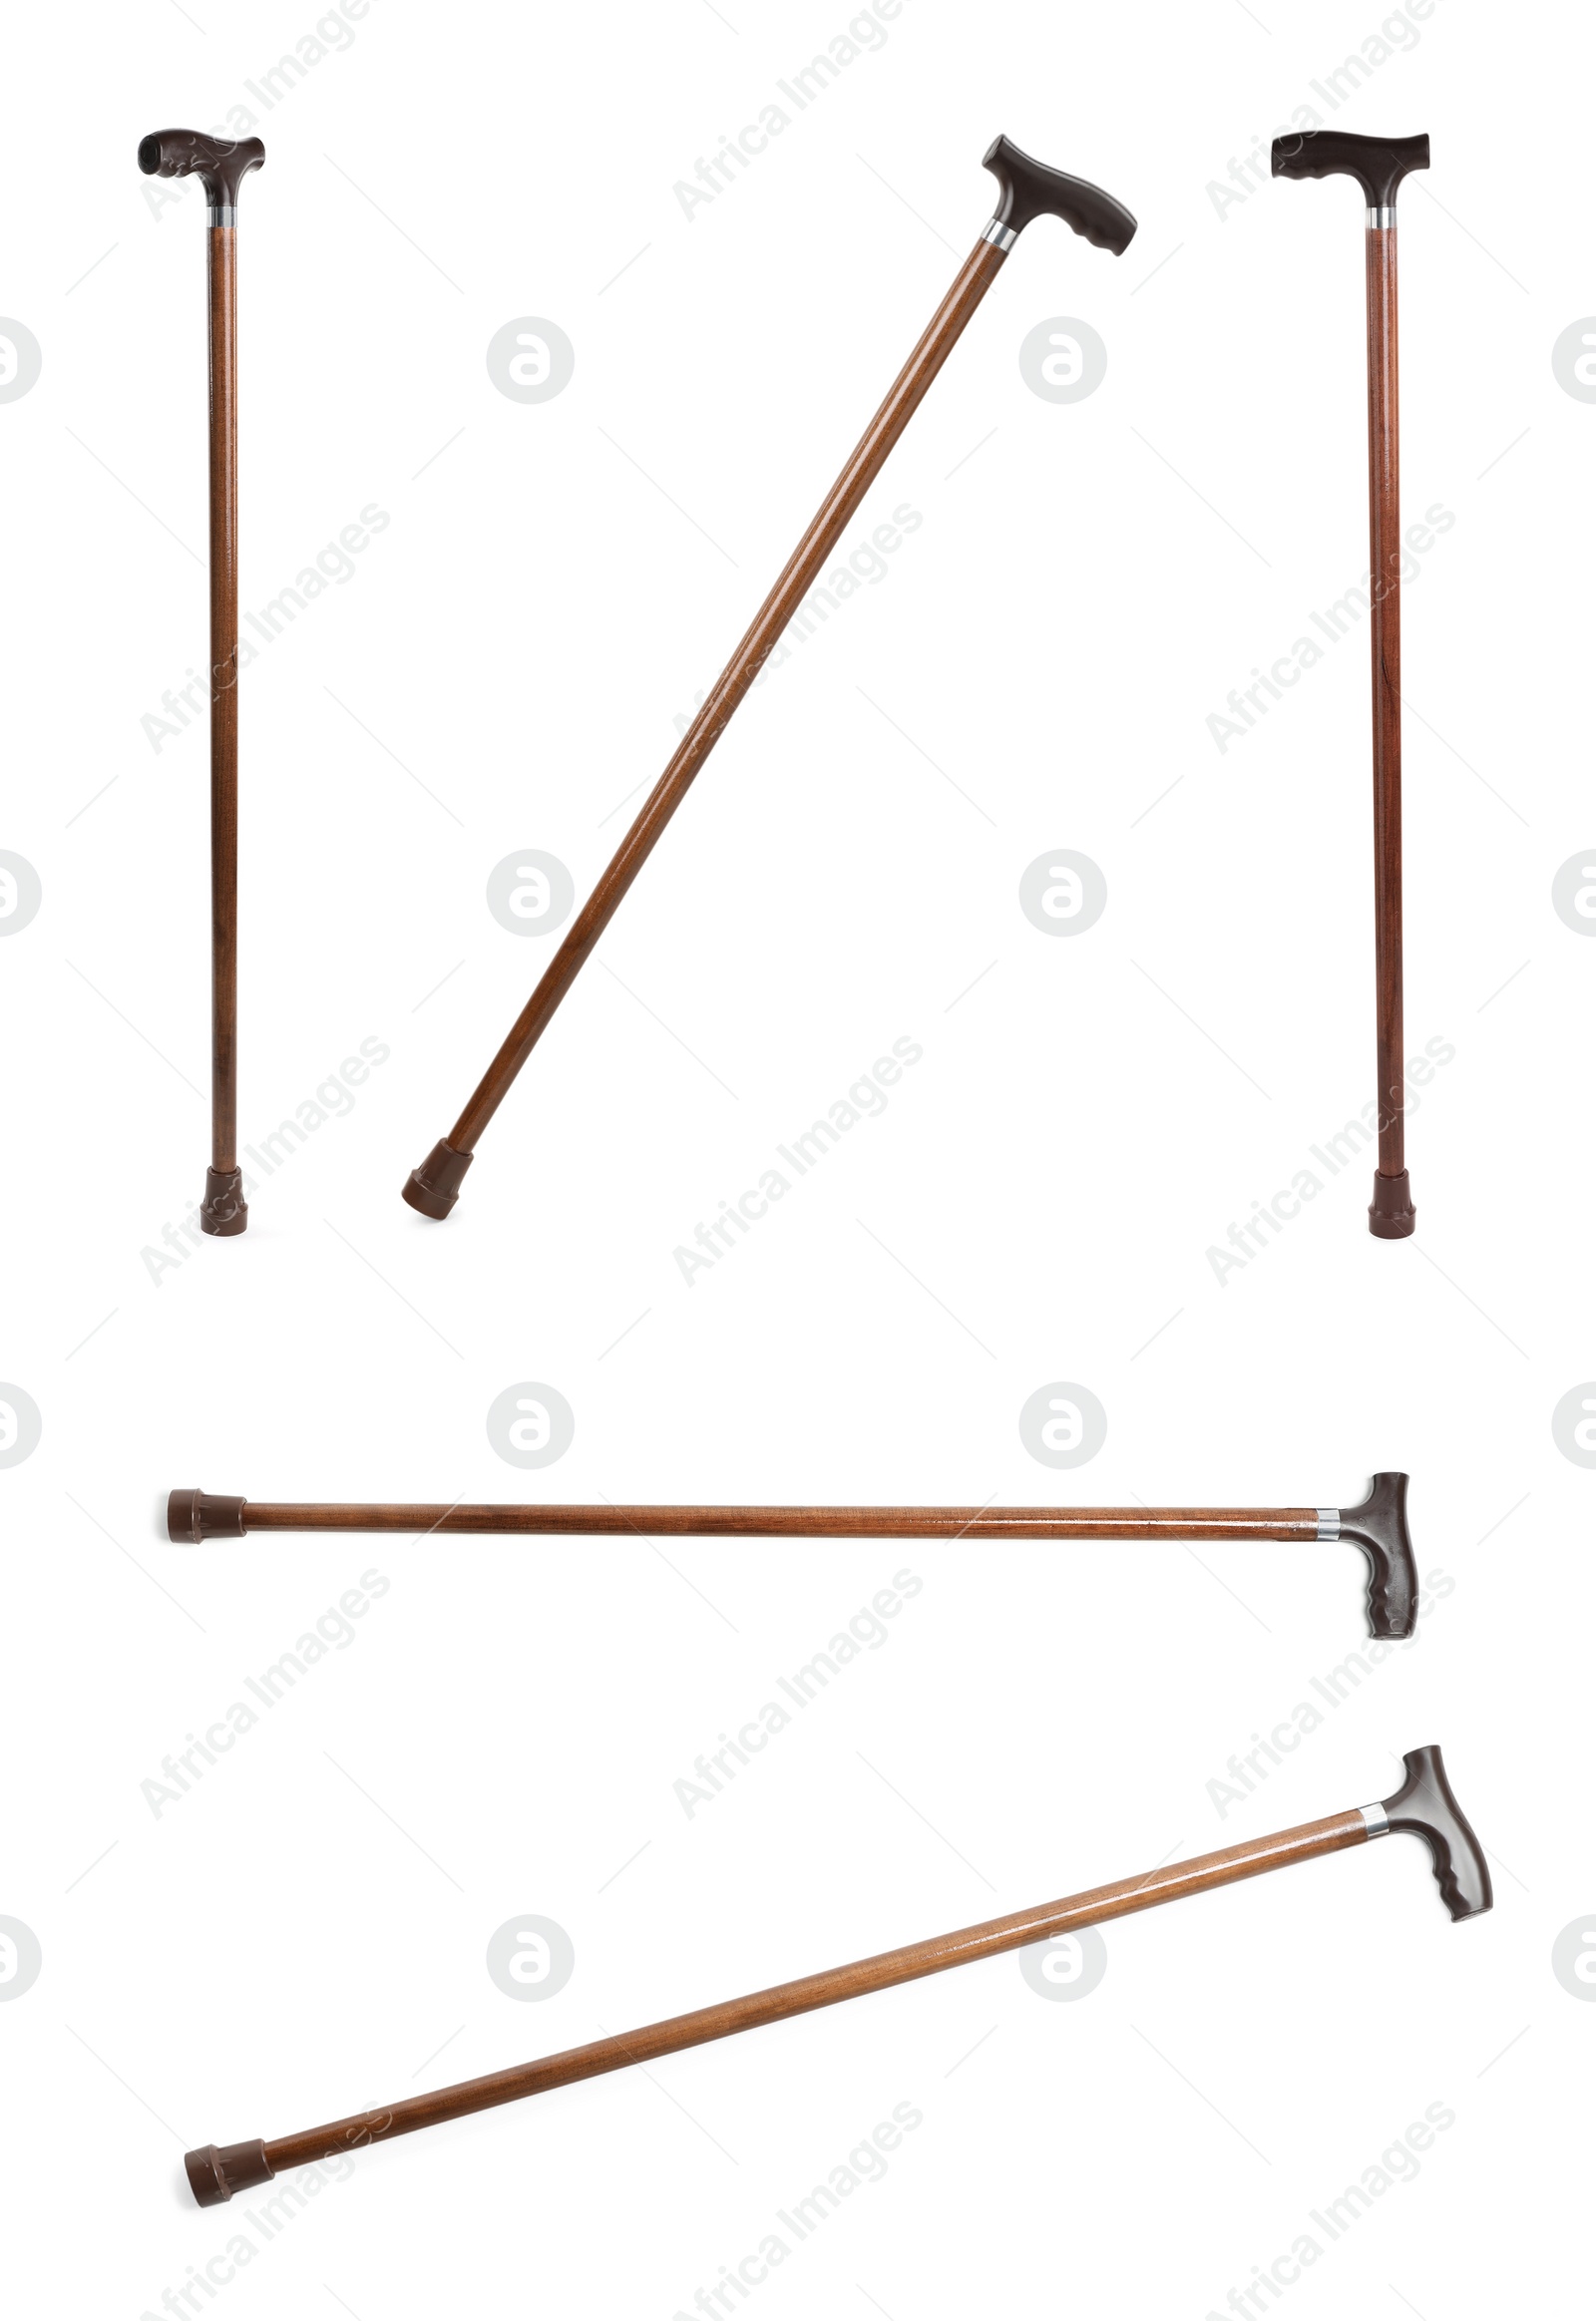 Image of Set with elegant wooden walking canes on white background